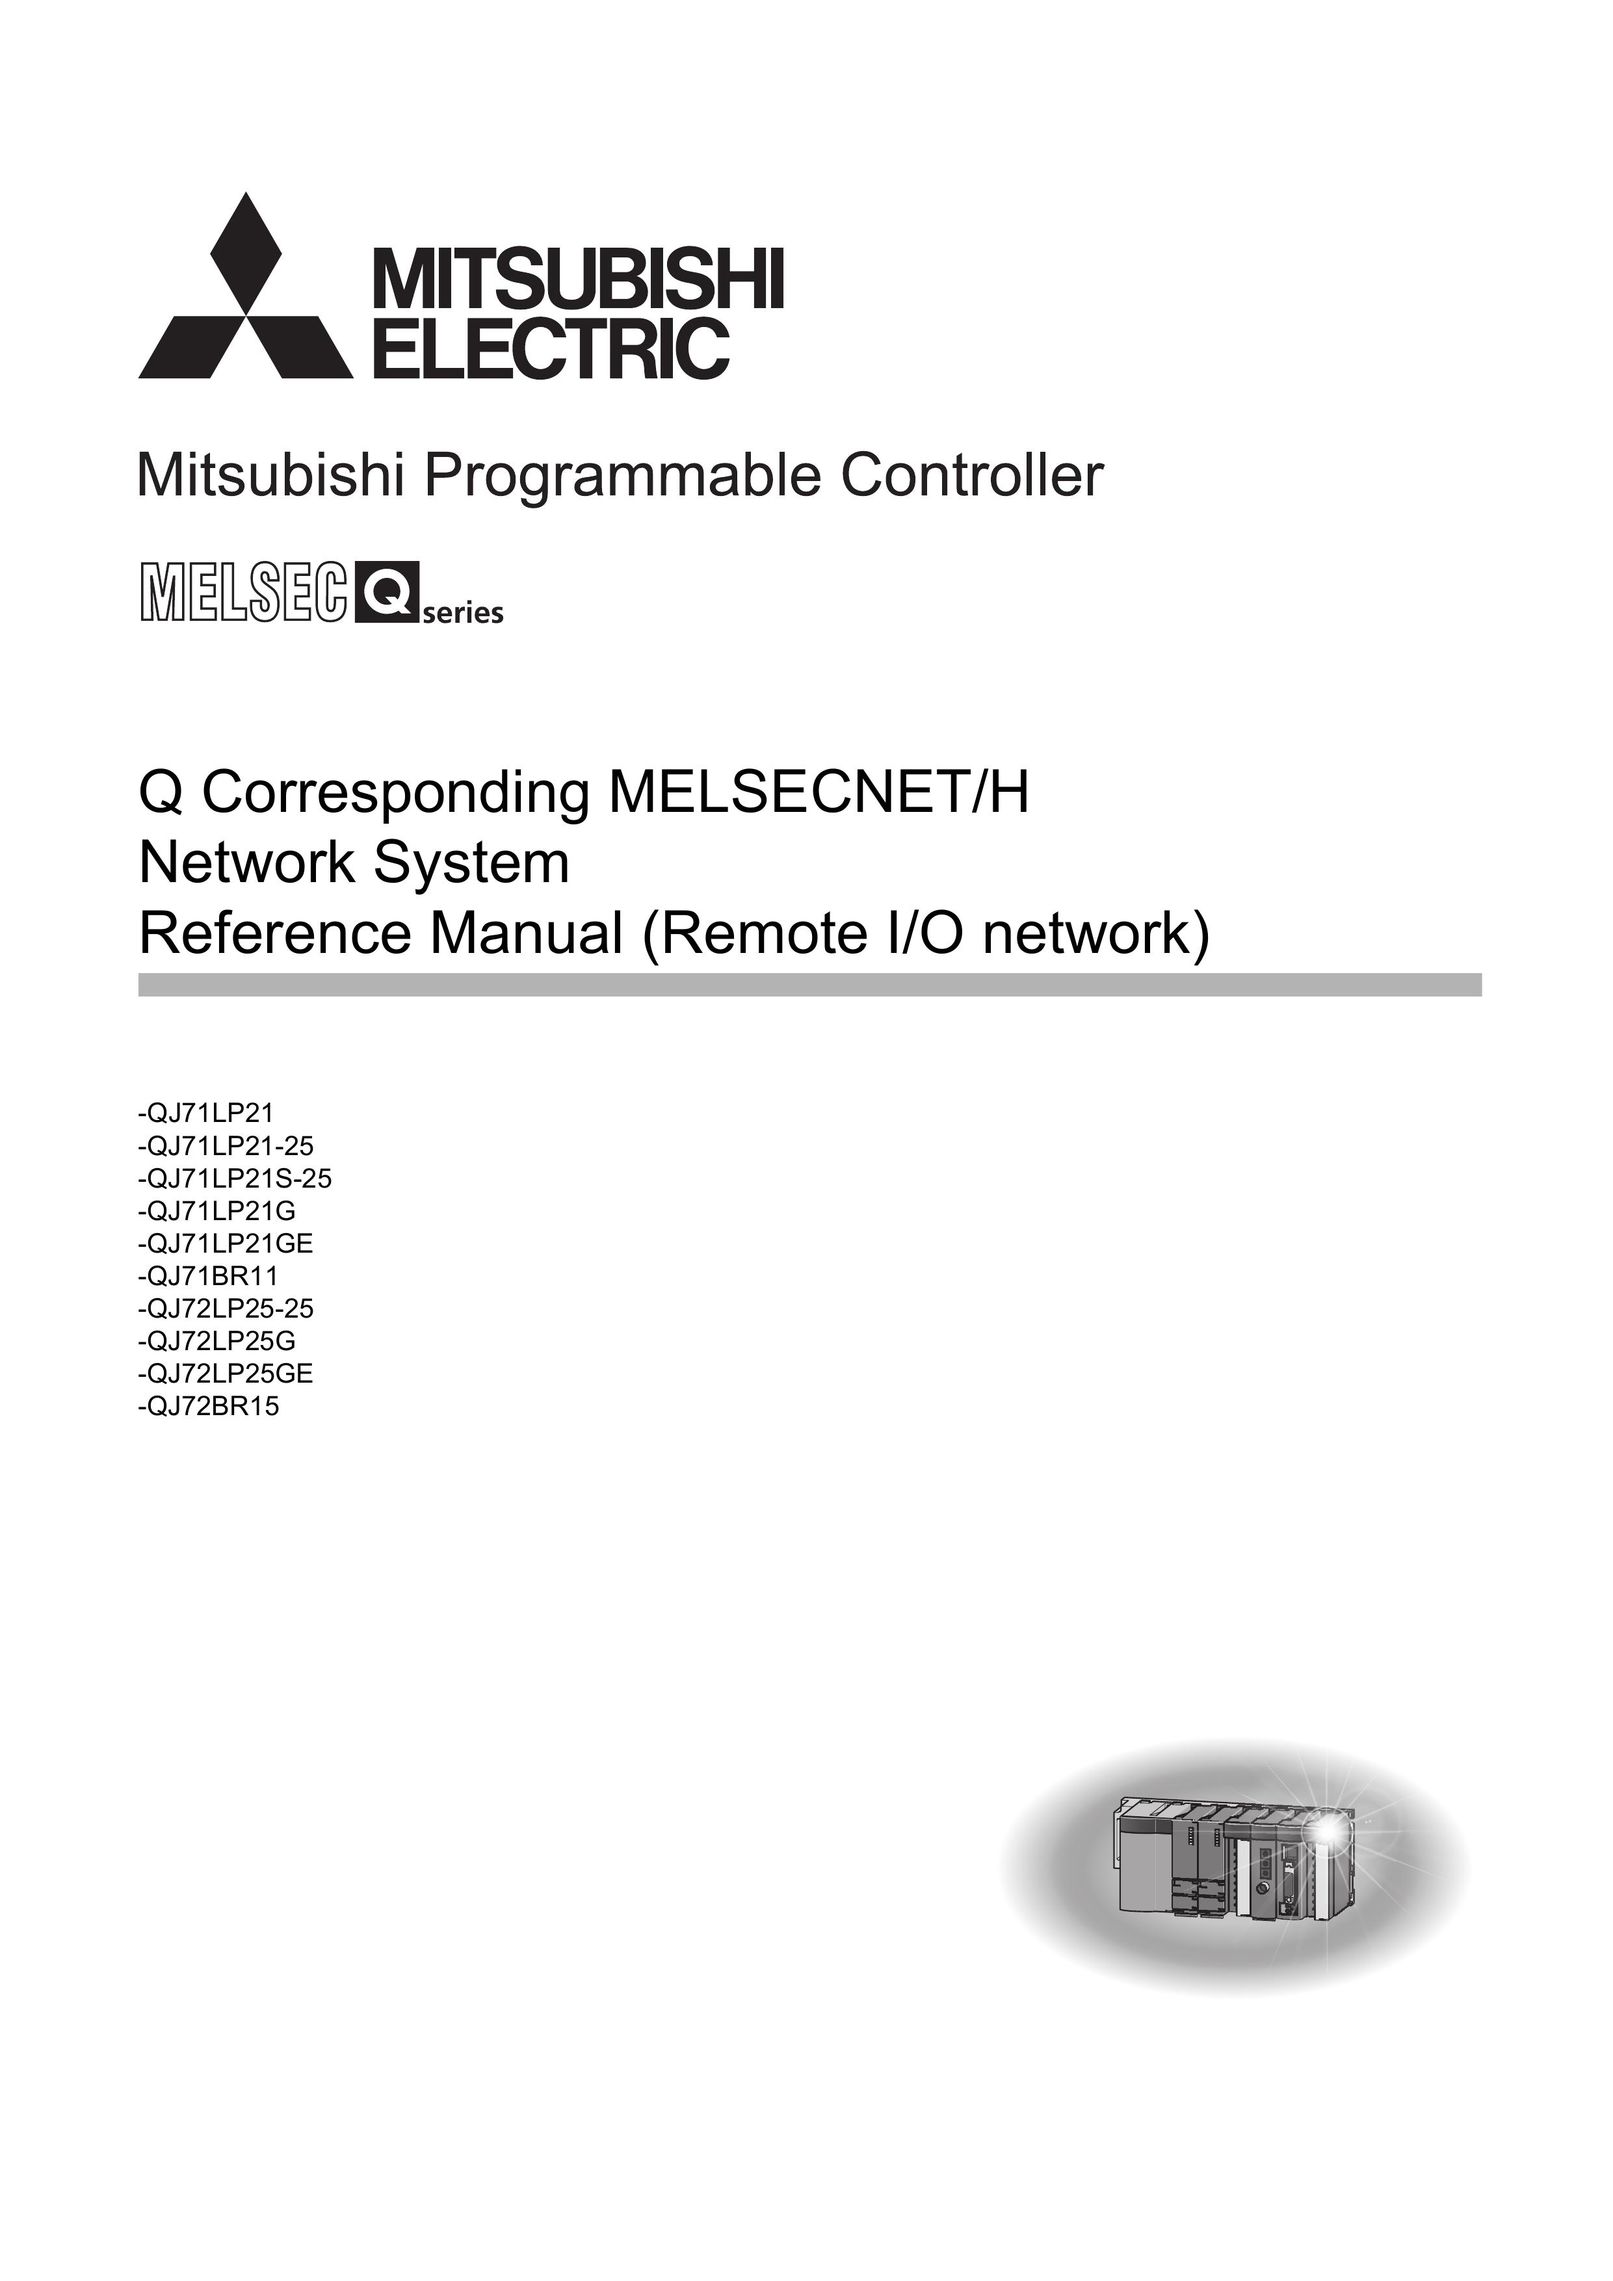 Mitsubishi Electronics QJ72LP25-25 Universal Remote User Manual